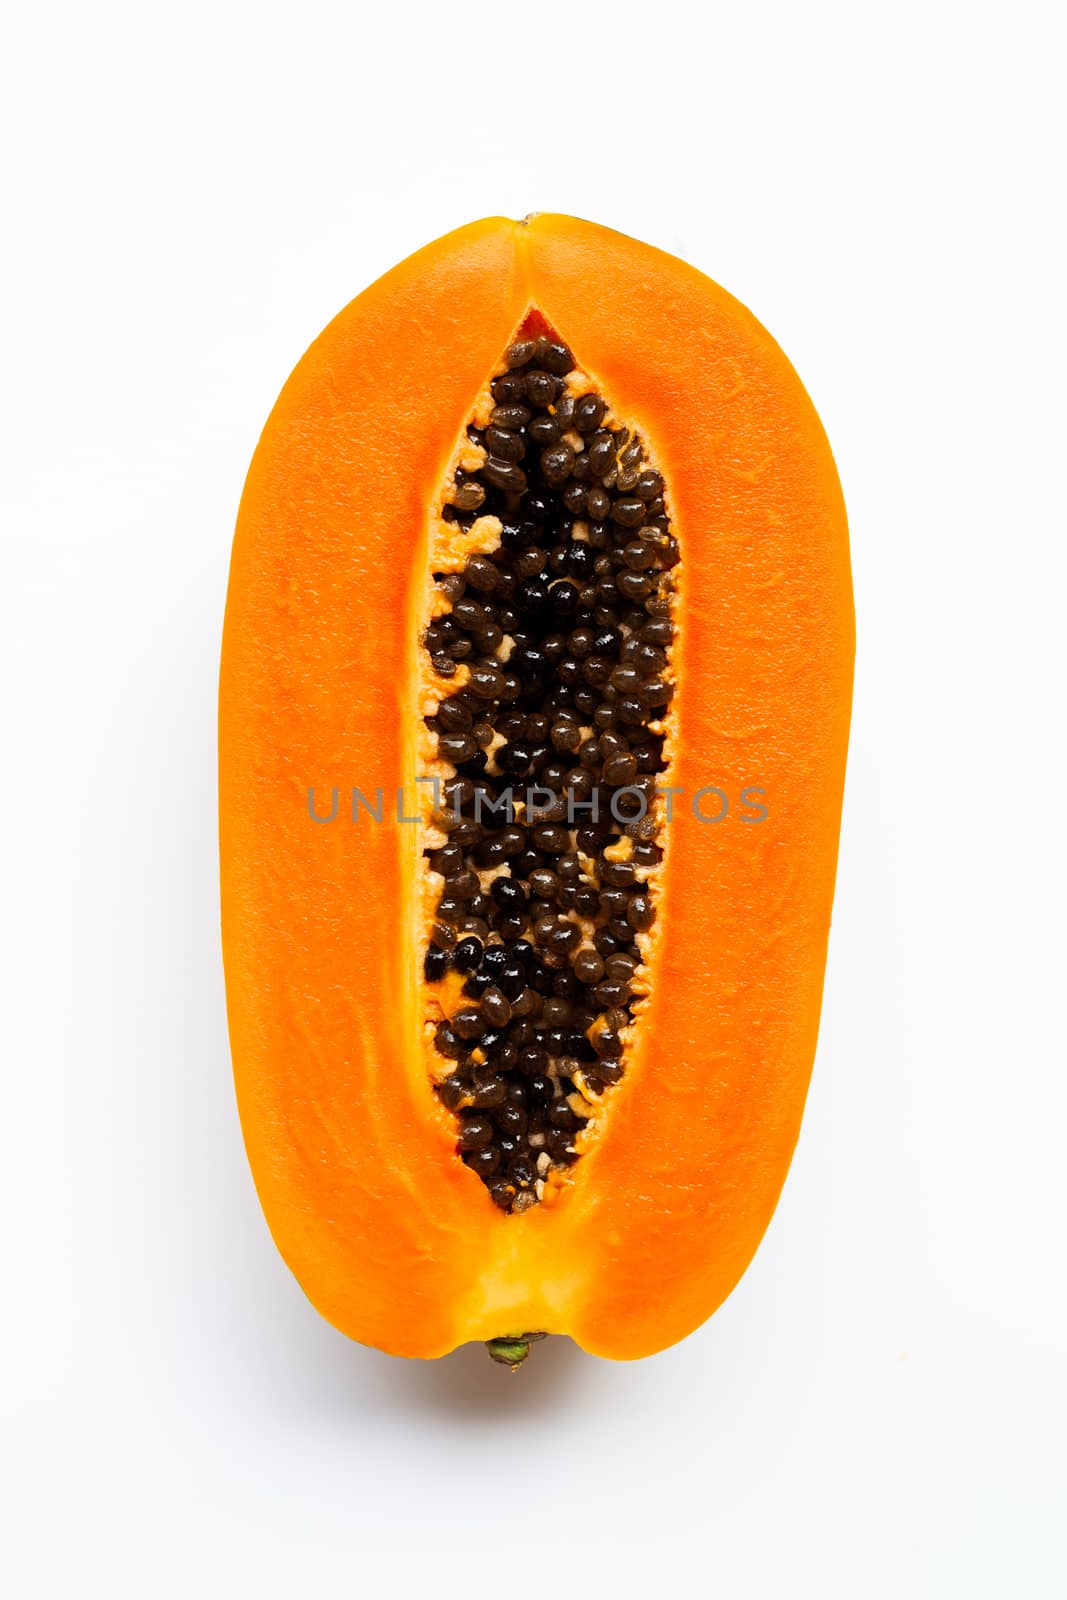 Ripe papaya fruit on white background. by Bowonpat